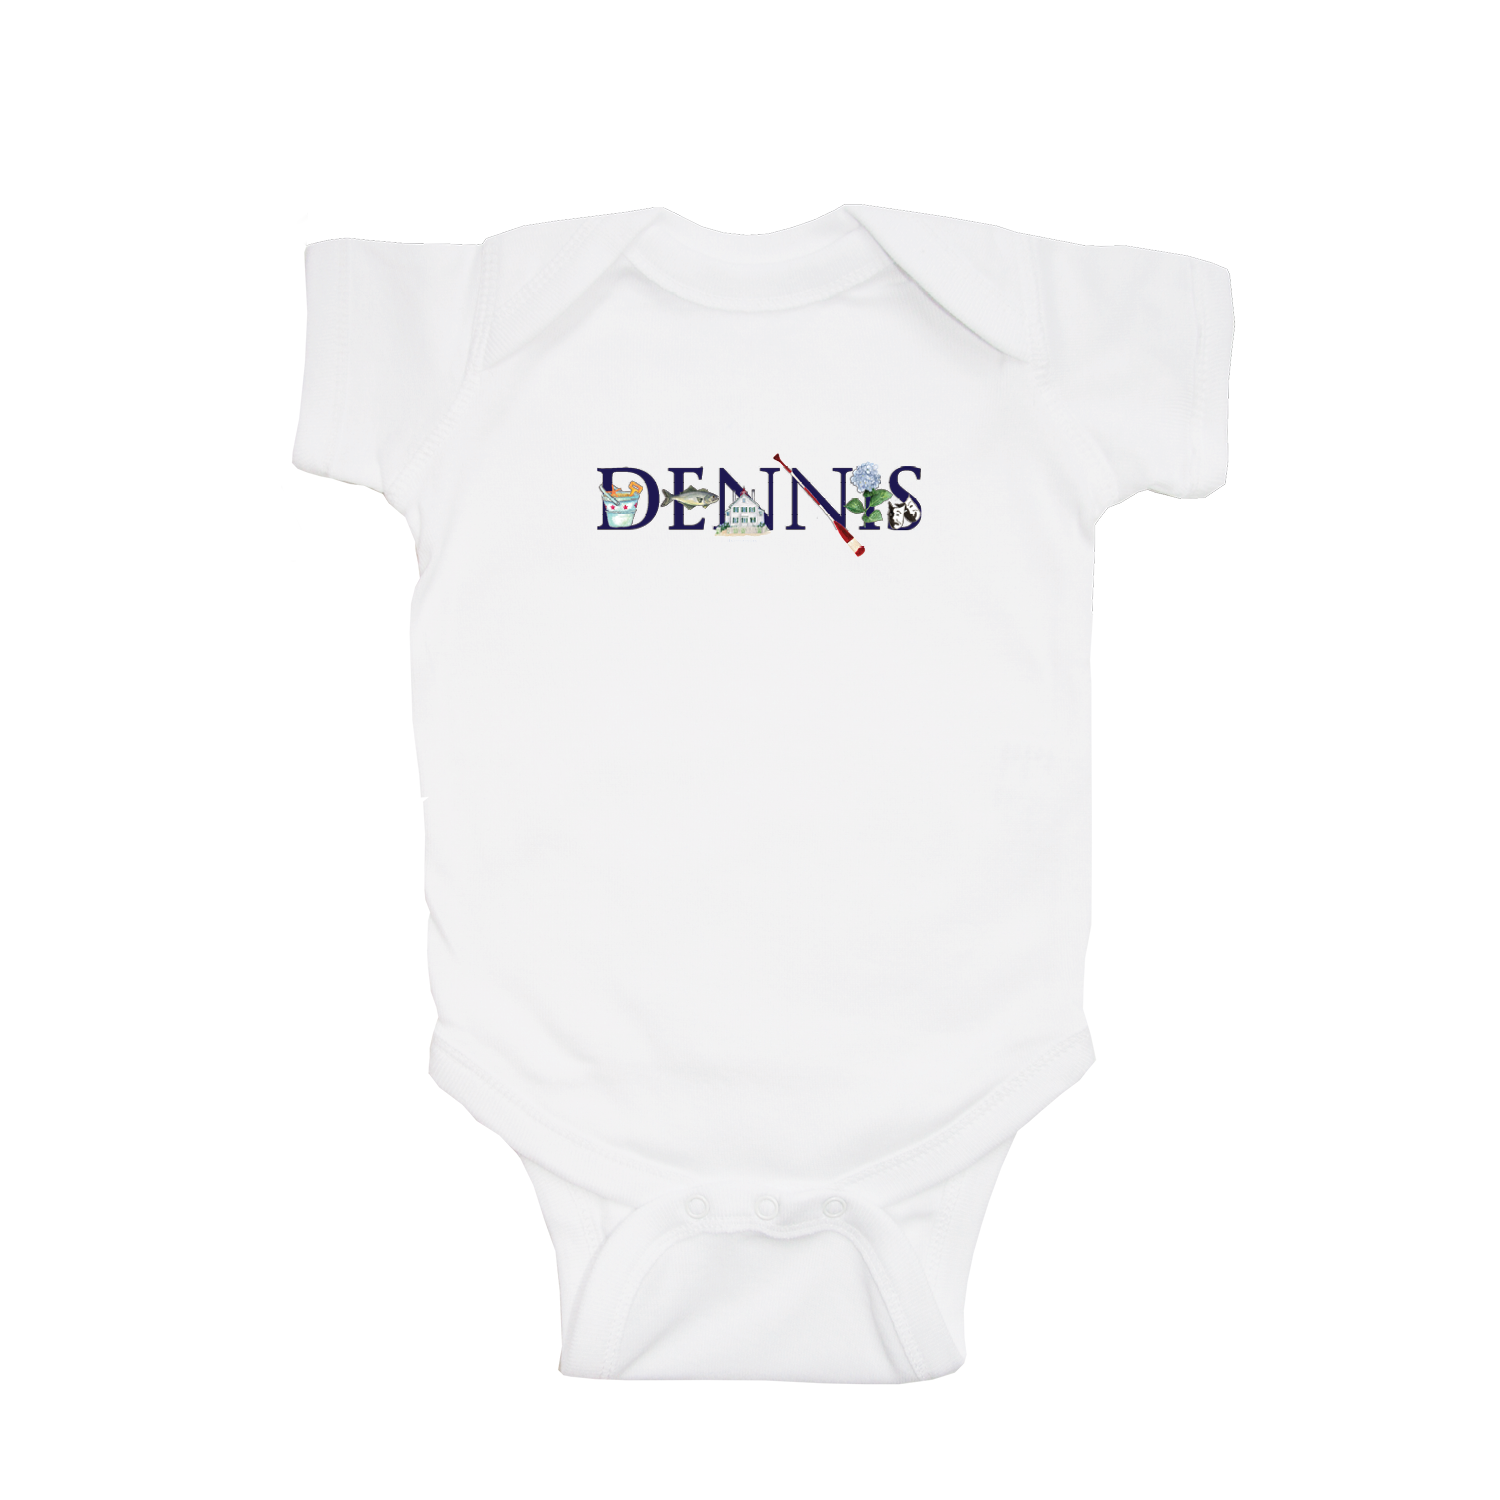 dennis baby snap up short sleeve